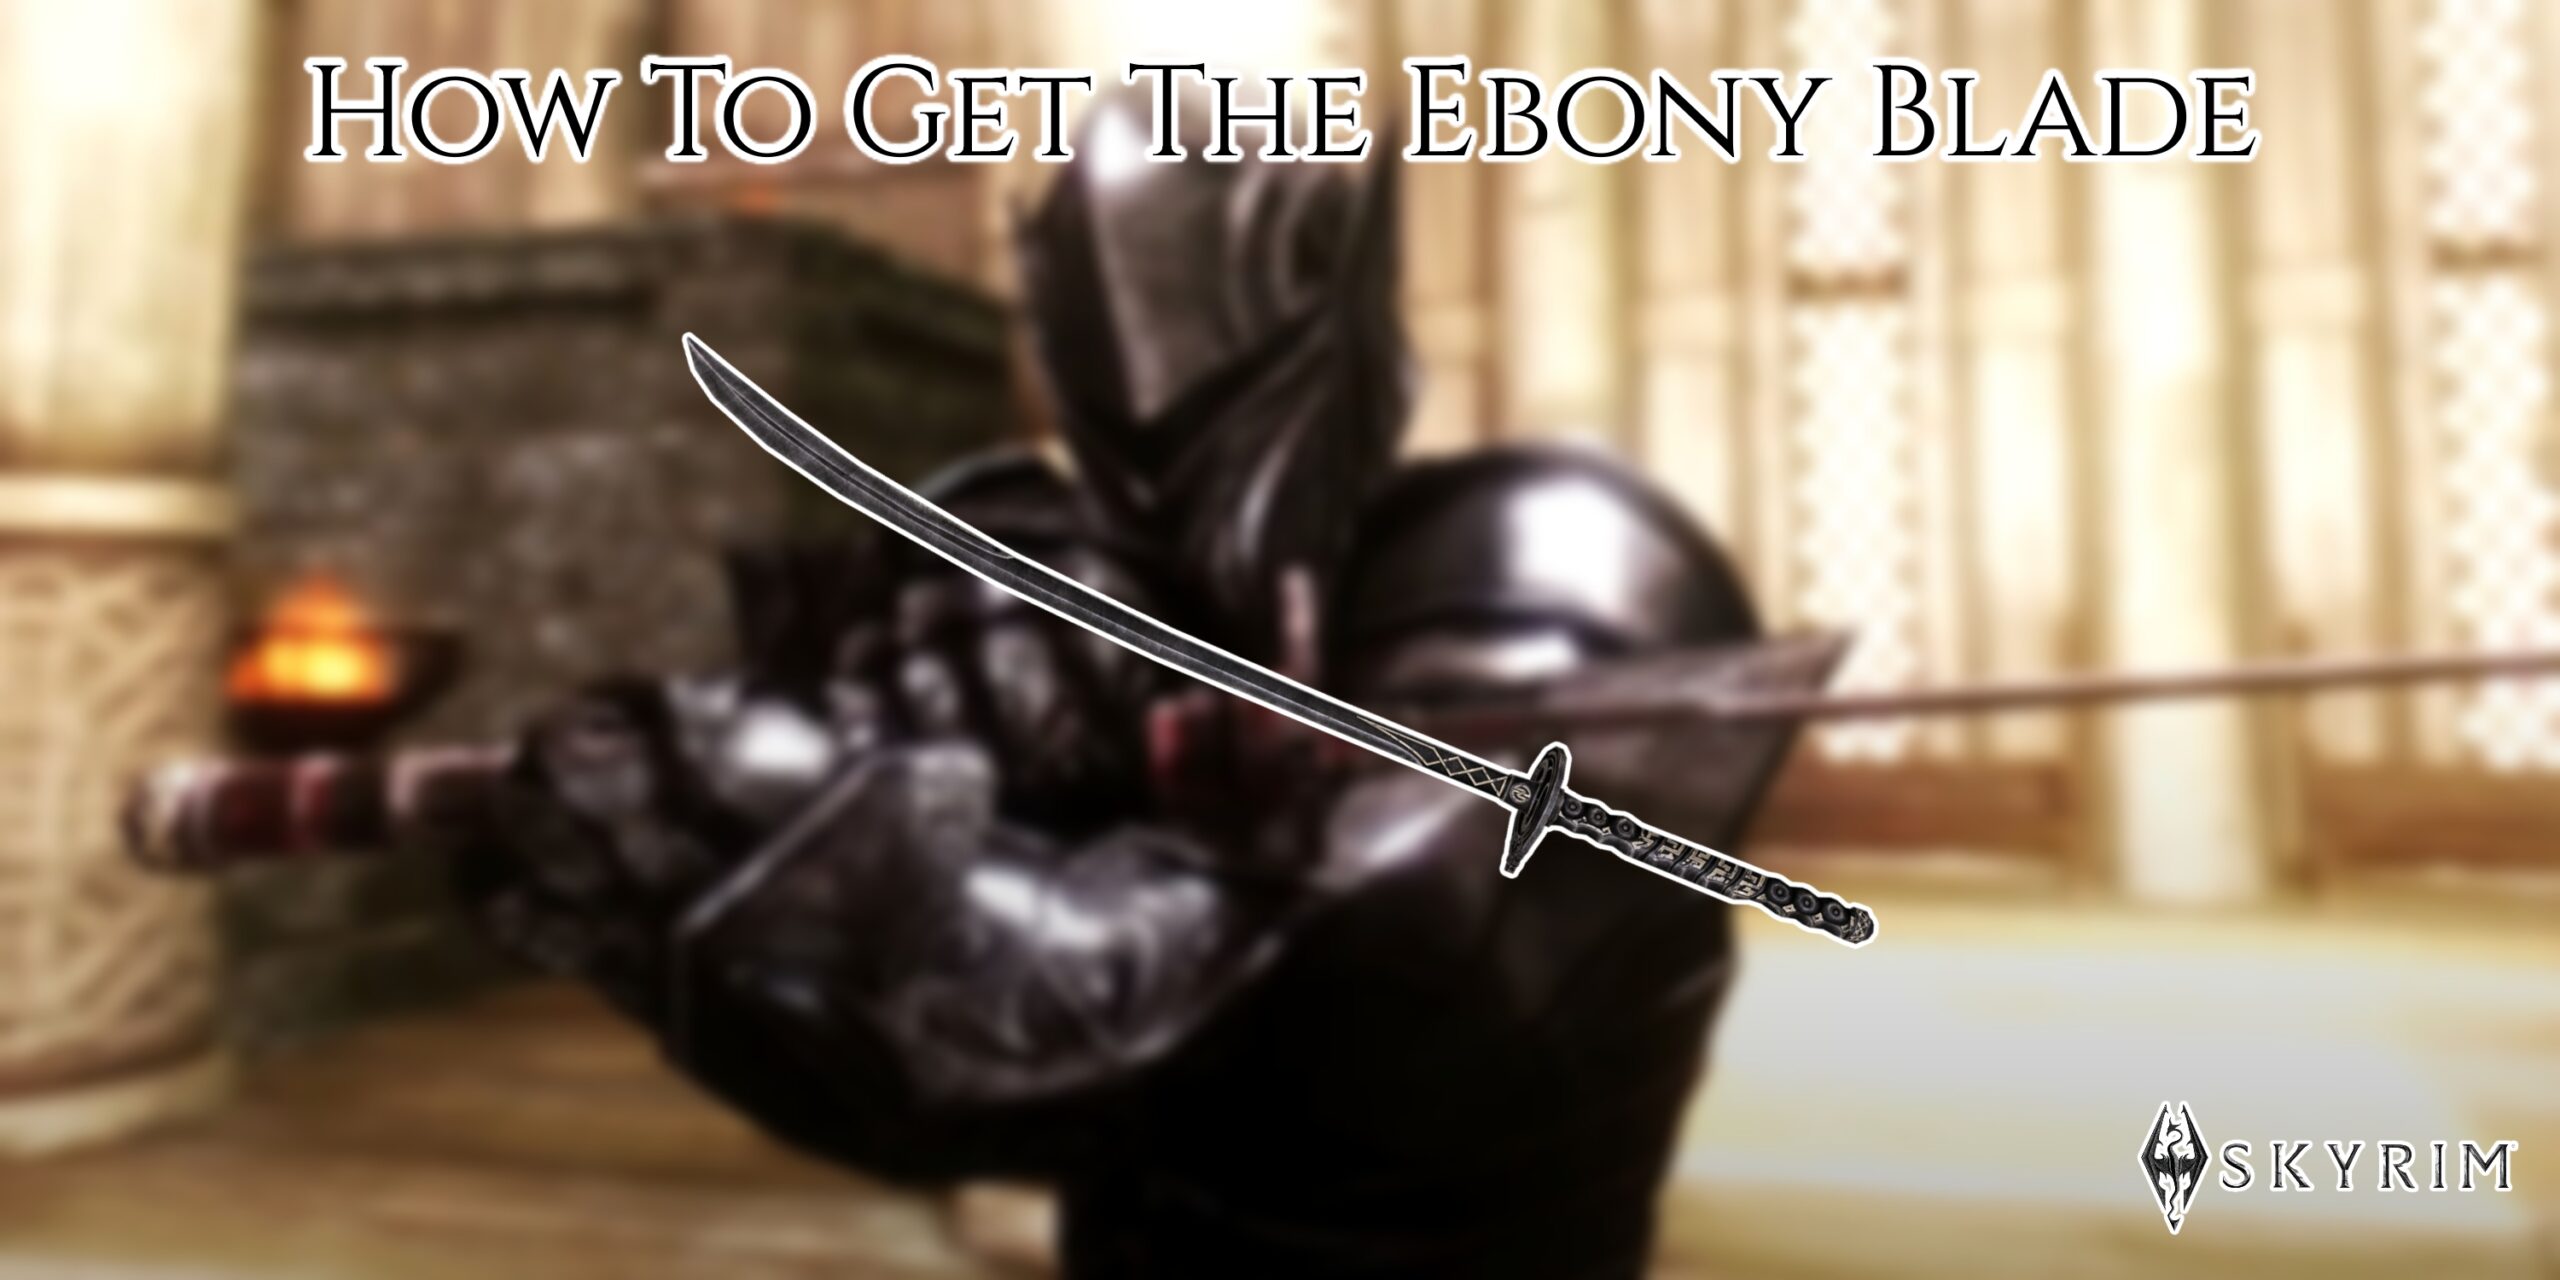 Skyrim ebony blade how to make it stronger